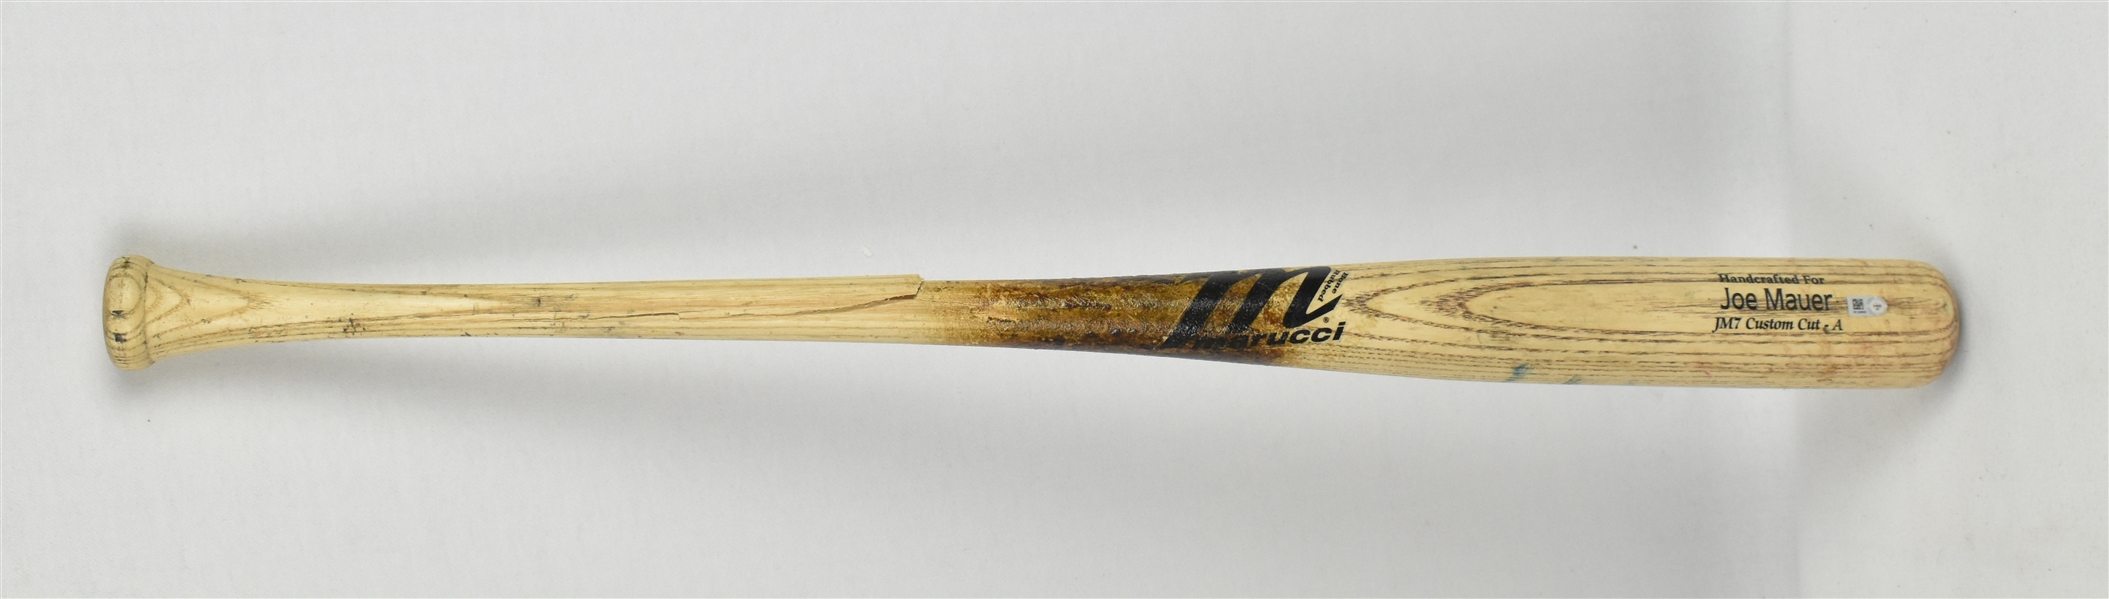 Joe Mauer 2014 Minnesota Twins Game Used Bat Used 9/16/2014 vs. Tigers